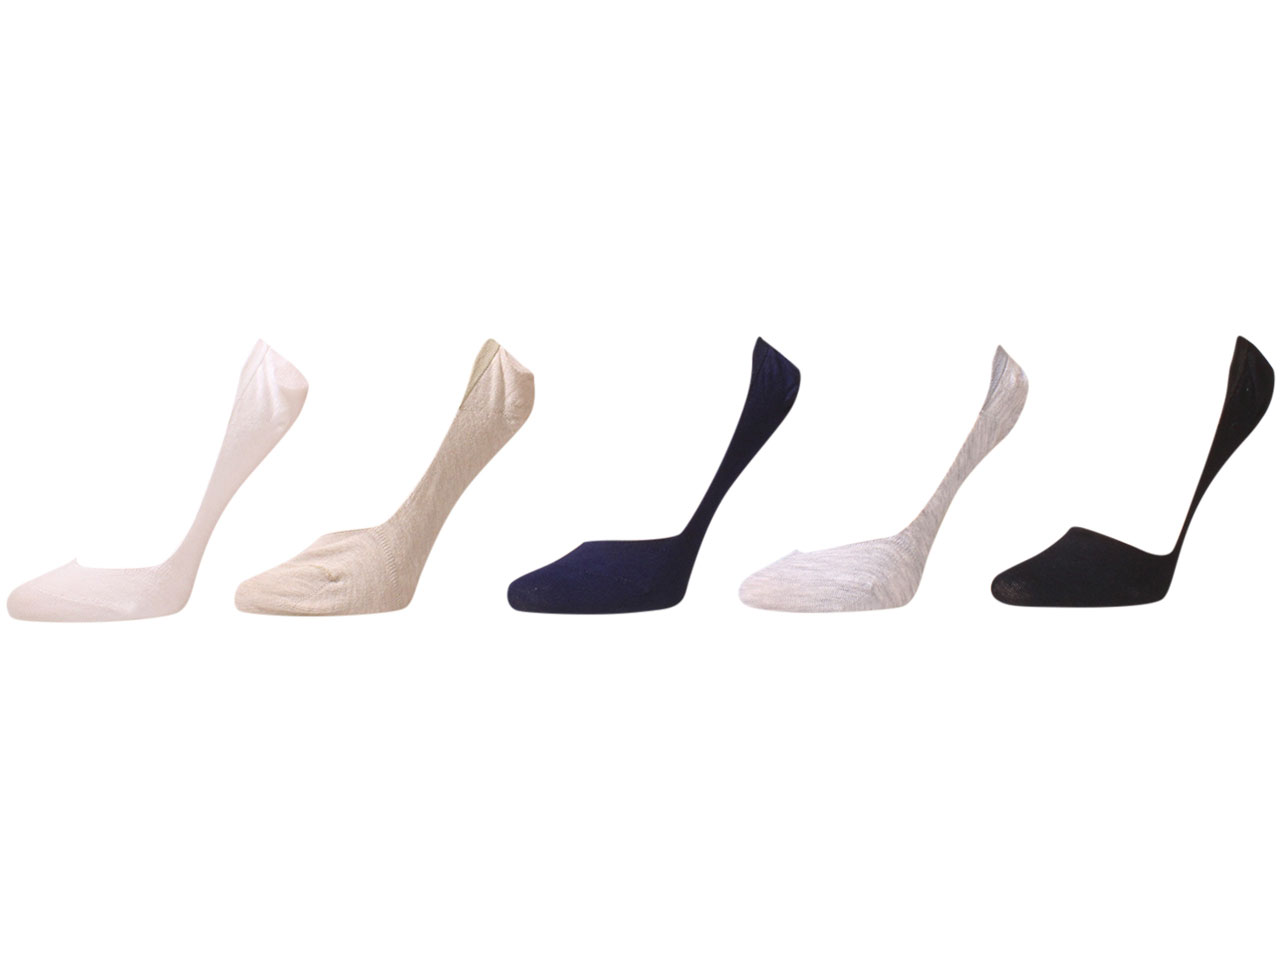 https://www.joylot.com/gallery-option/554277924/1/lauren-by-ralph-lauren-womens-socks-flat-knit-liners-no-show-5-pairs-white-grey-black-1.jpg